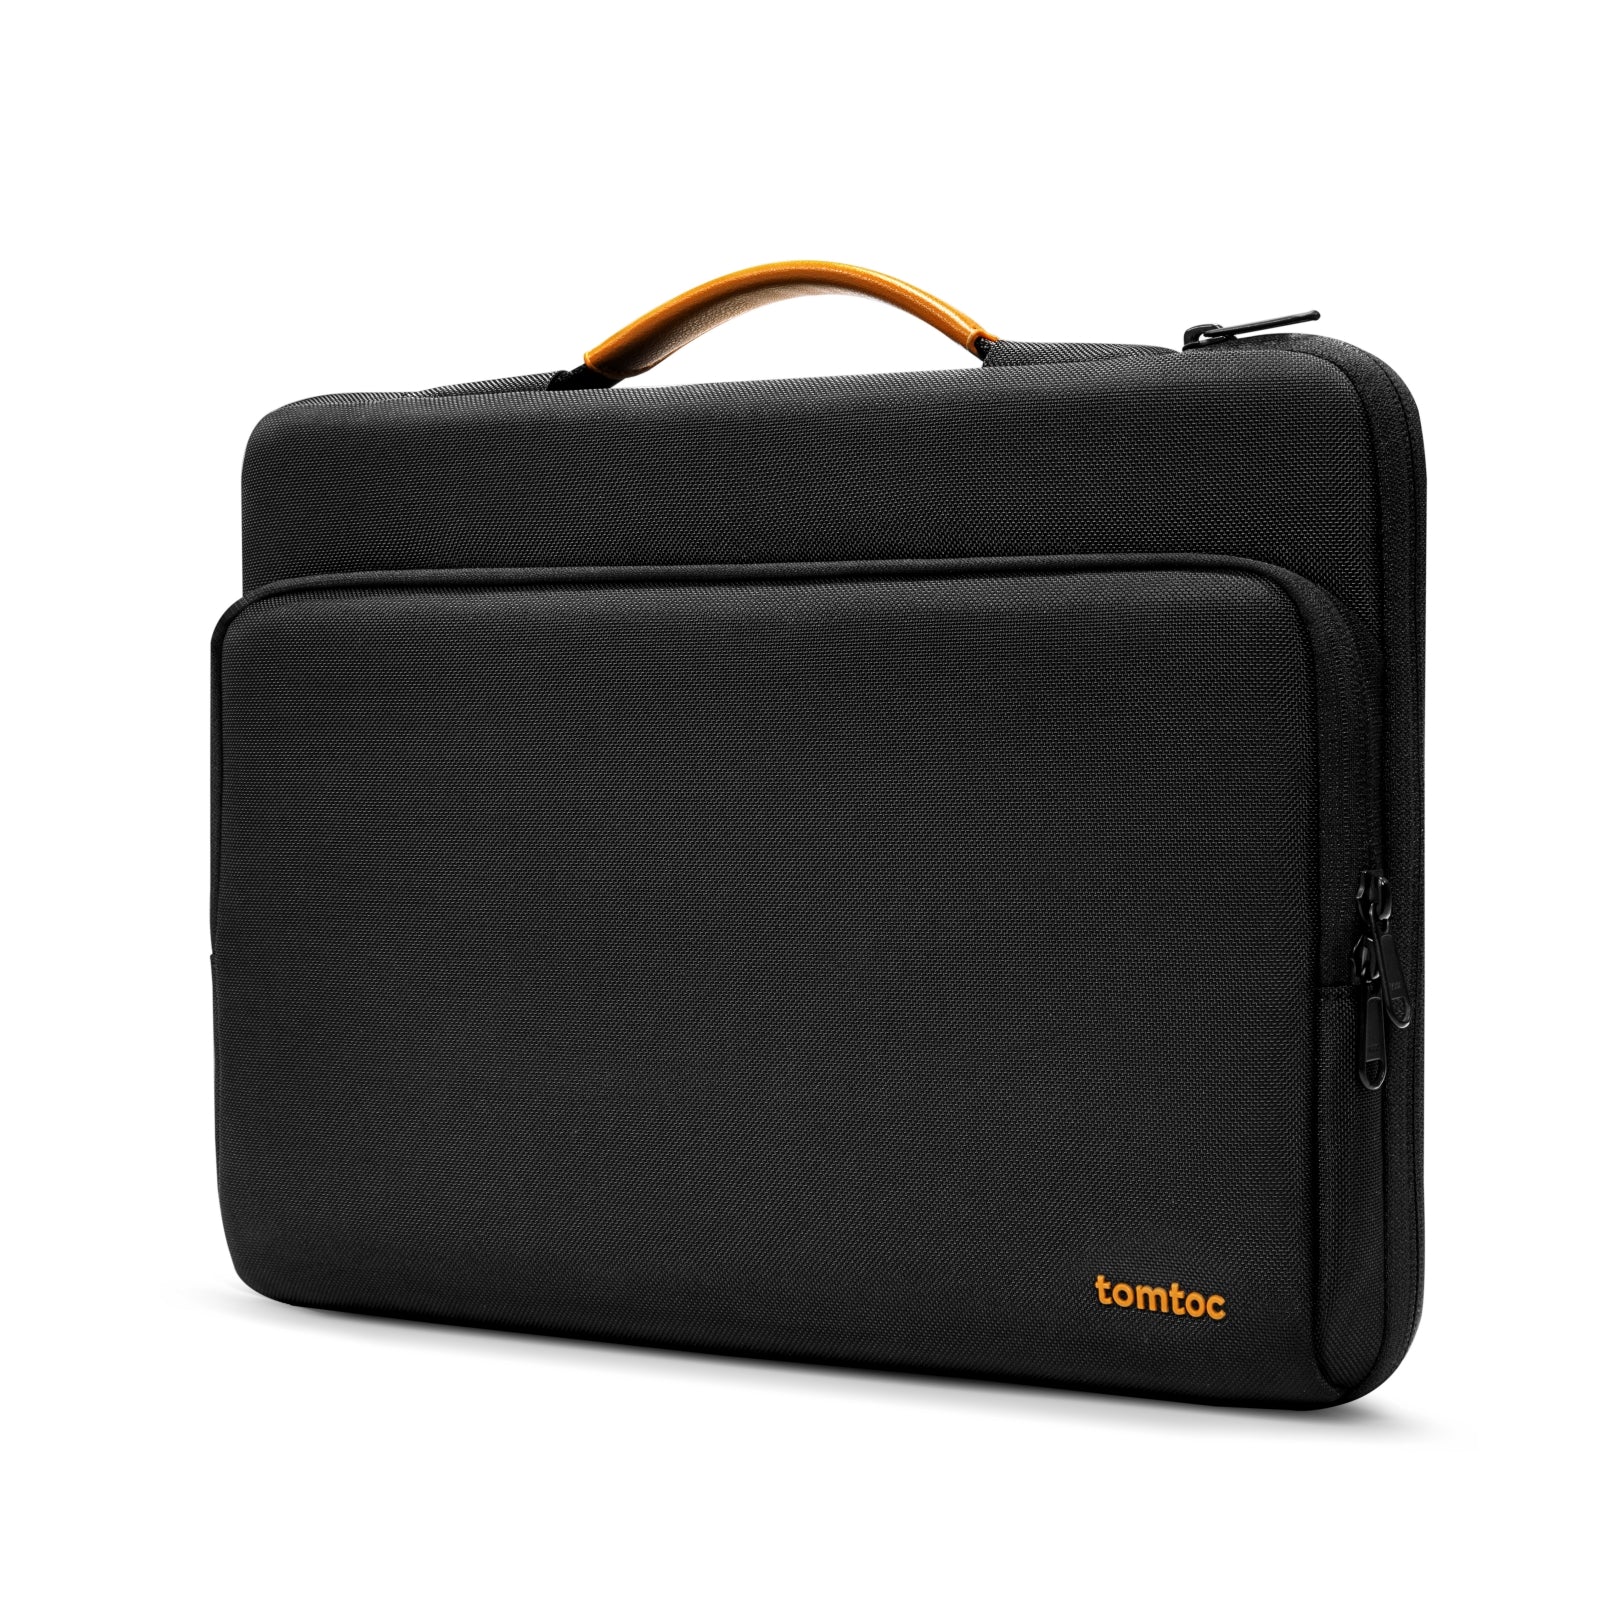 Defender-A14 Laptop Briefcase 13-inch New MacBook Pro & Air